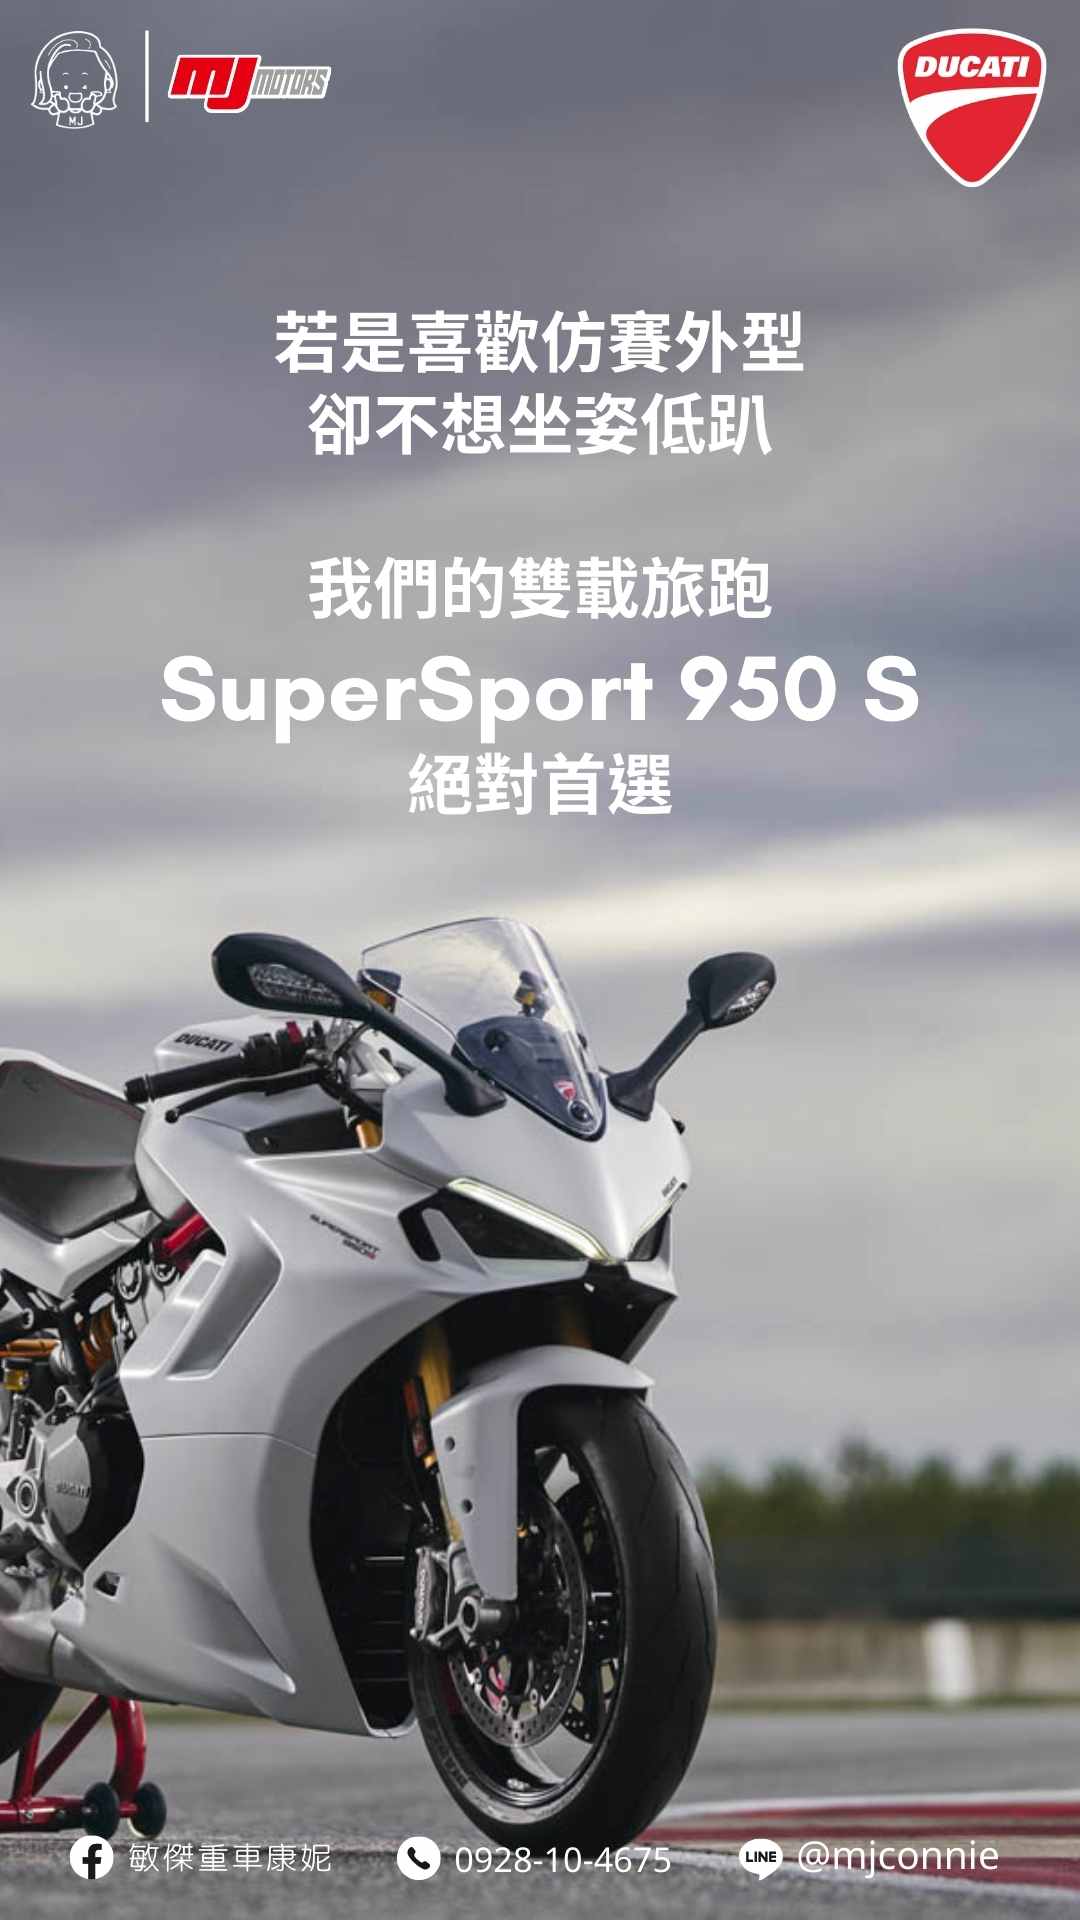 DUCATI SuperSport S新車出售中 『敏傑康妮』Ducati SuperSport S 雙載舒適 配重輕巧 最受歡迎的義式旅跑 價格99.8萬元 | 敏傑車業資深銷售專員 康妮 Connie